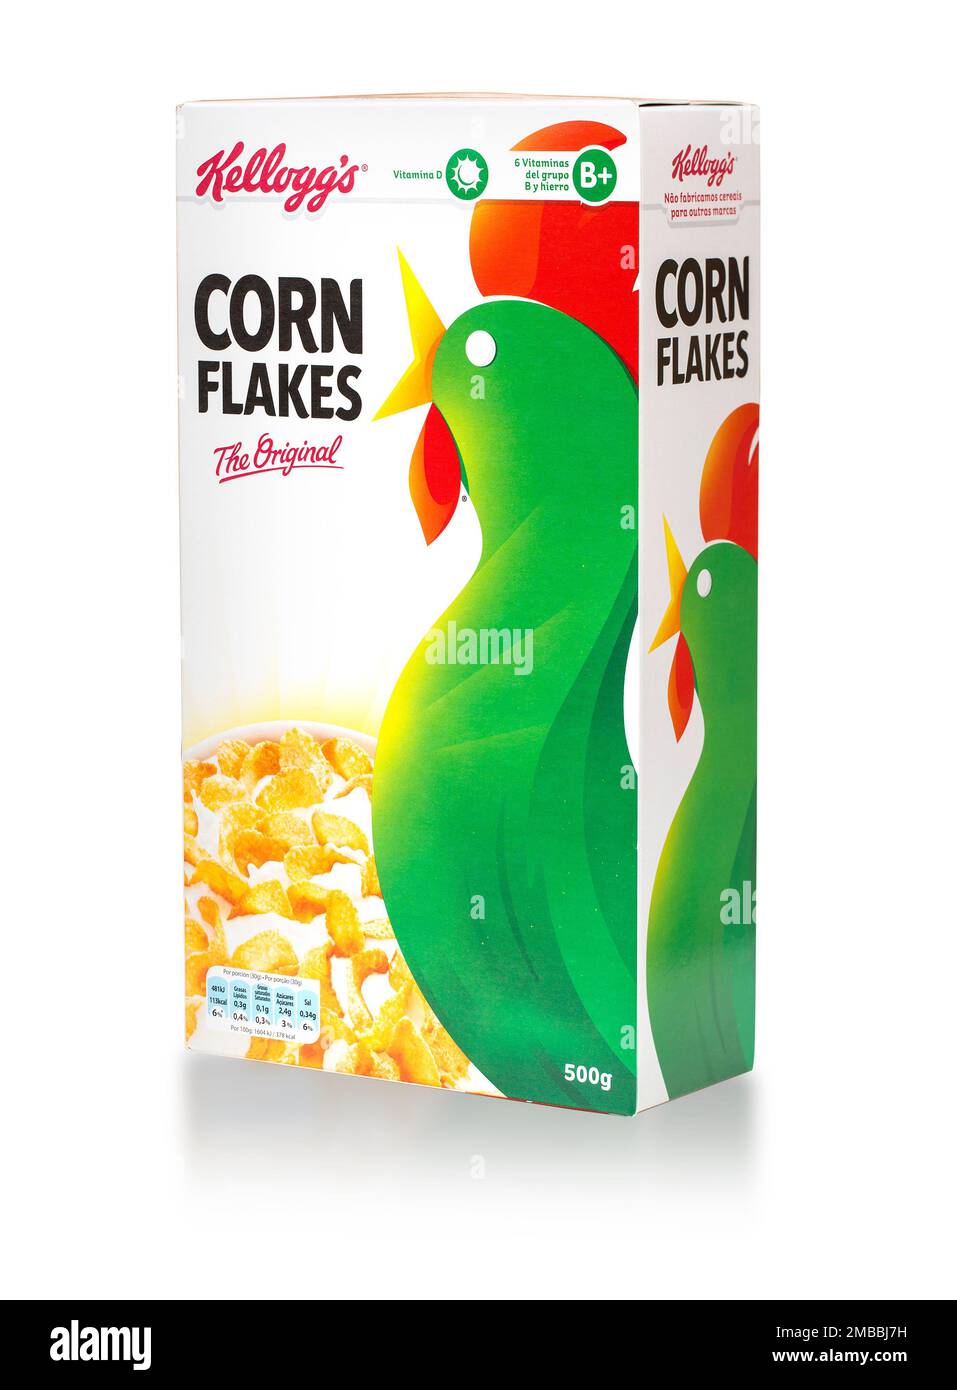 Mallorca, Spanien - April27, 2016: Kellogg's Corn Flakes Original Frühstückscerealien. Amerikanisches multinationales Lebensmittelunternehmen. Hauptquartier Batt Stockfoto